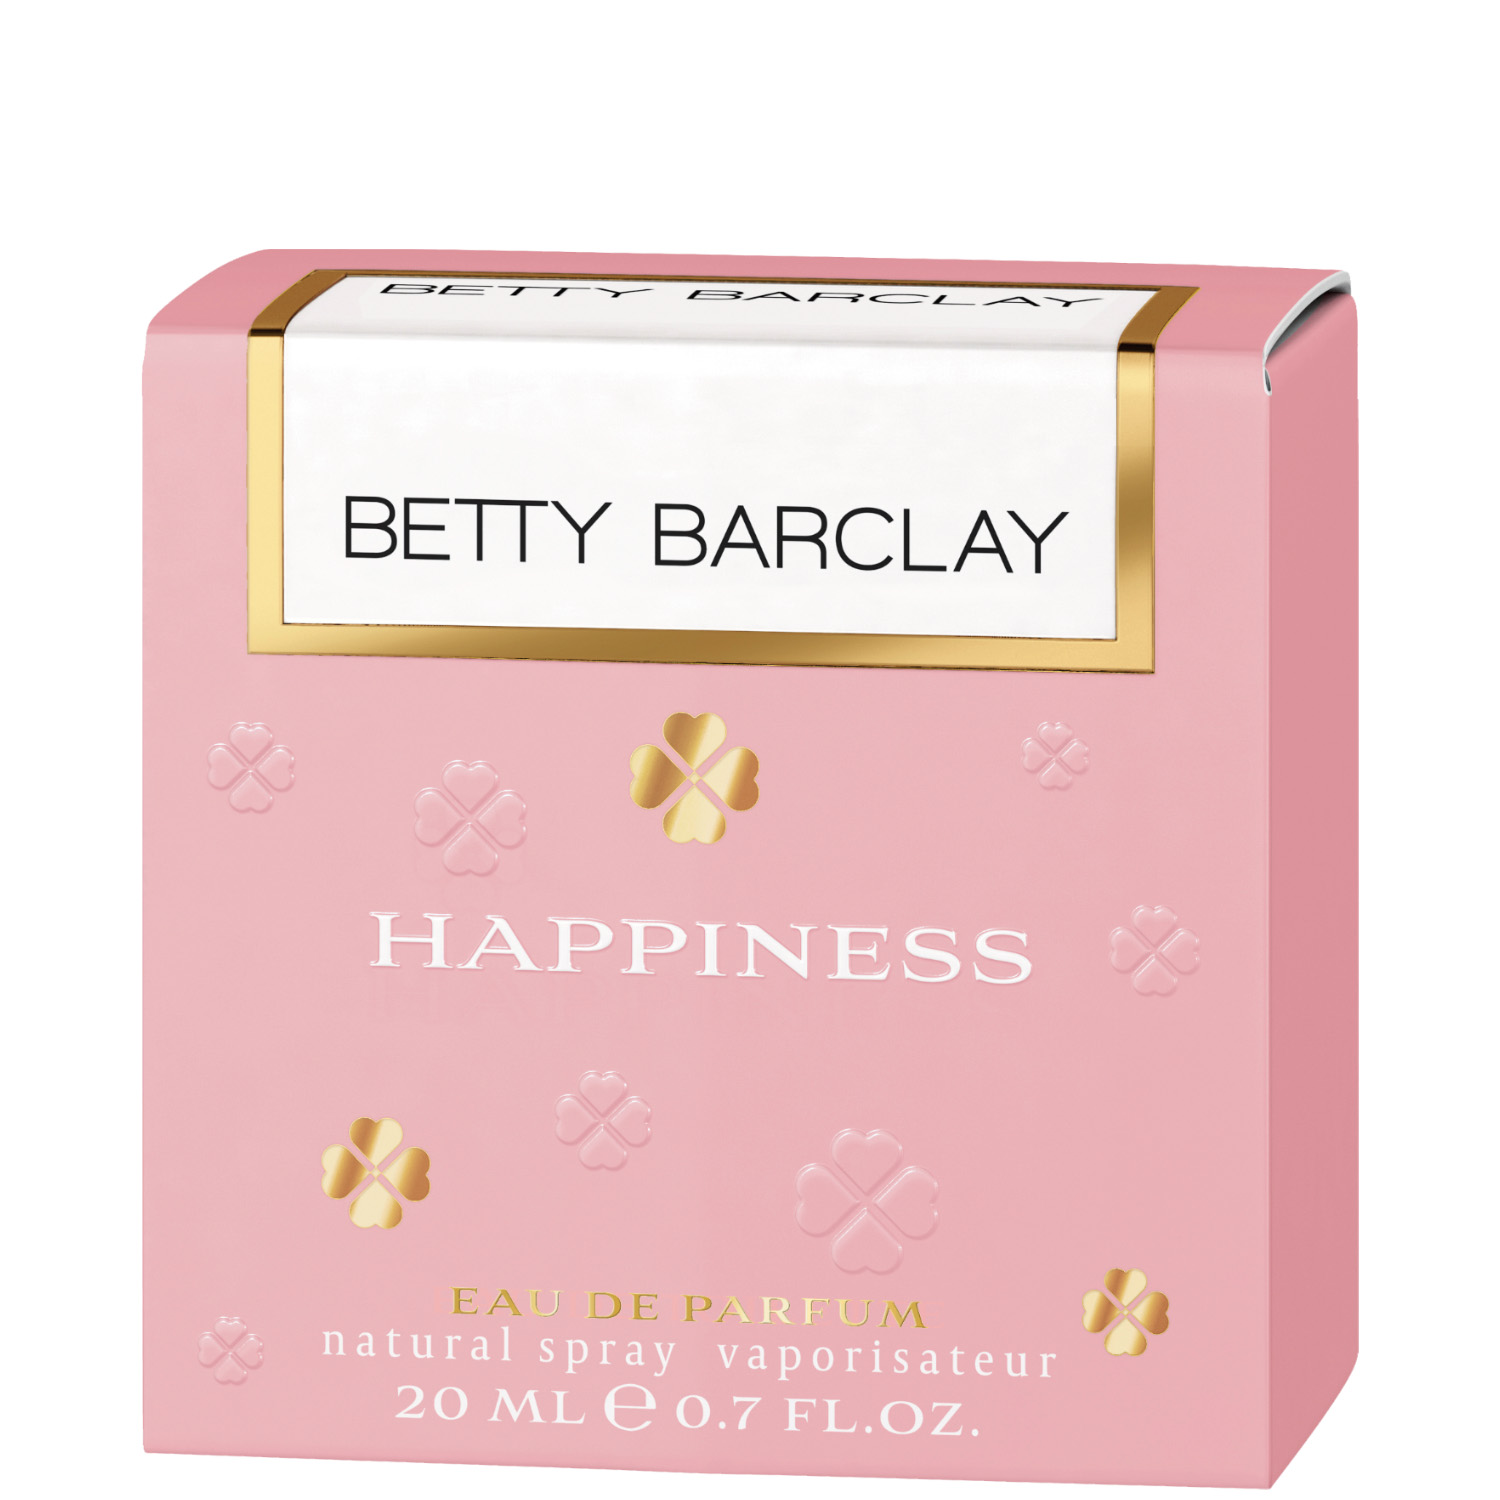 Betty Barclay Happiness Eau de Parfum 20ml